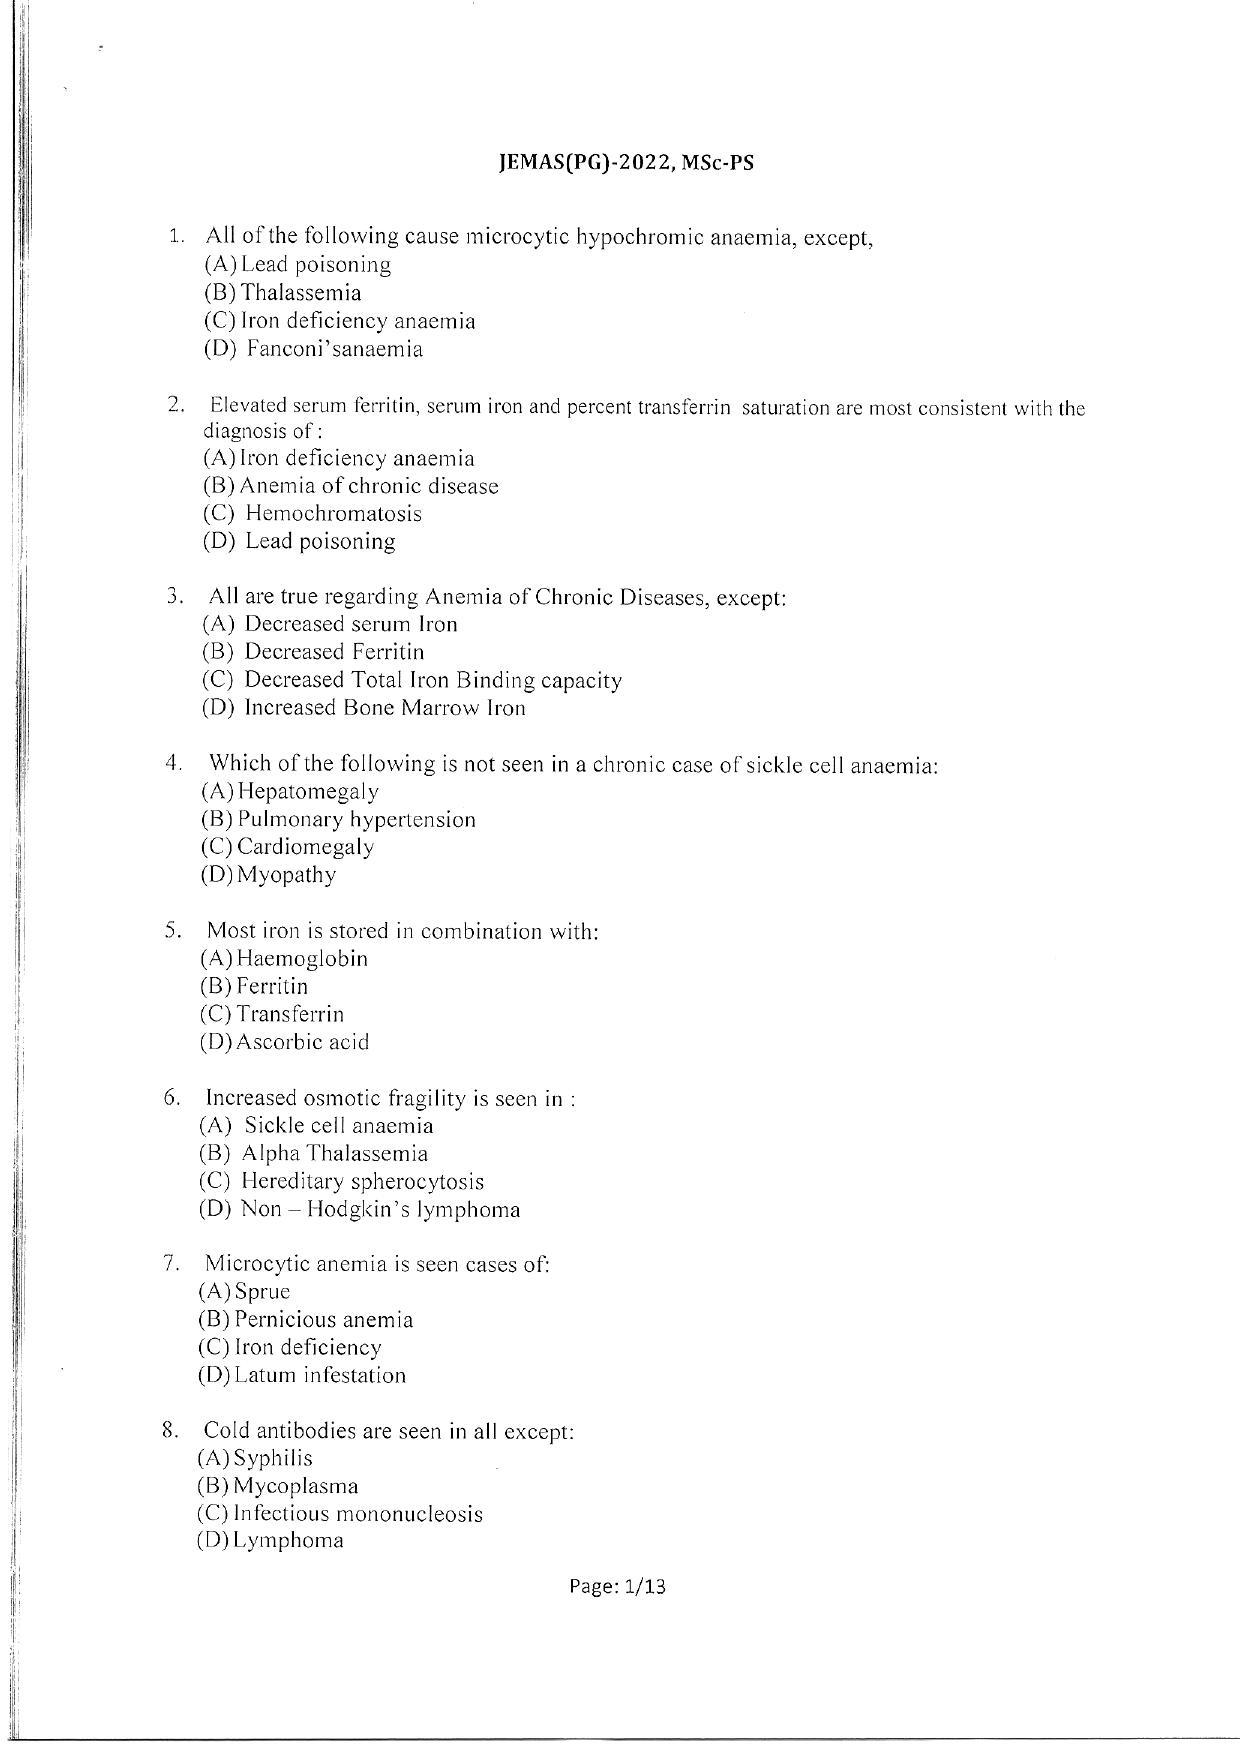 WBJEEB JEMAS (PG) 2022 MSc PS Question Paper - Page 3